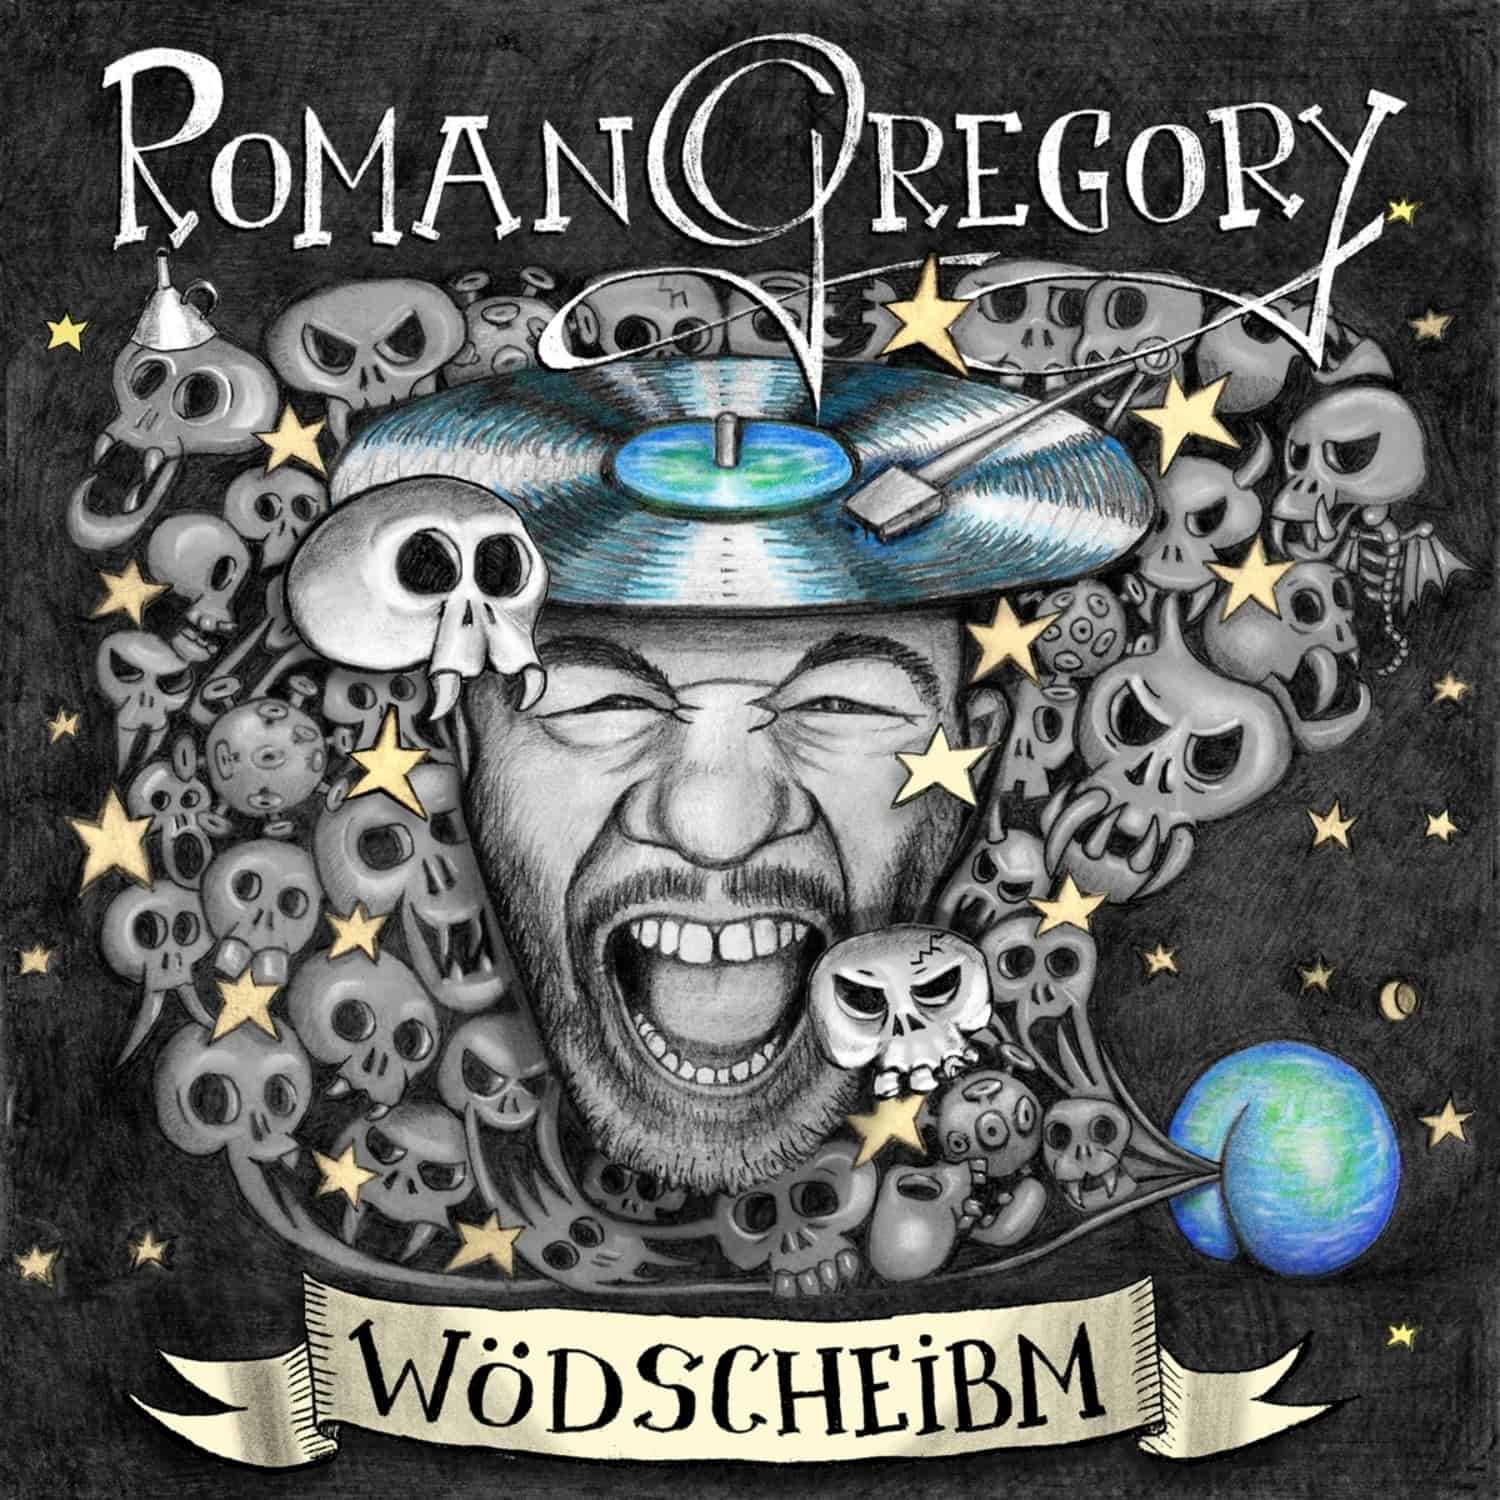  Roman Gregory - WDSCHEIBM 